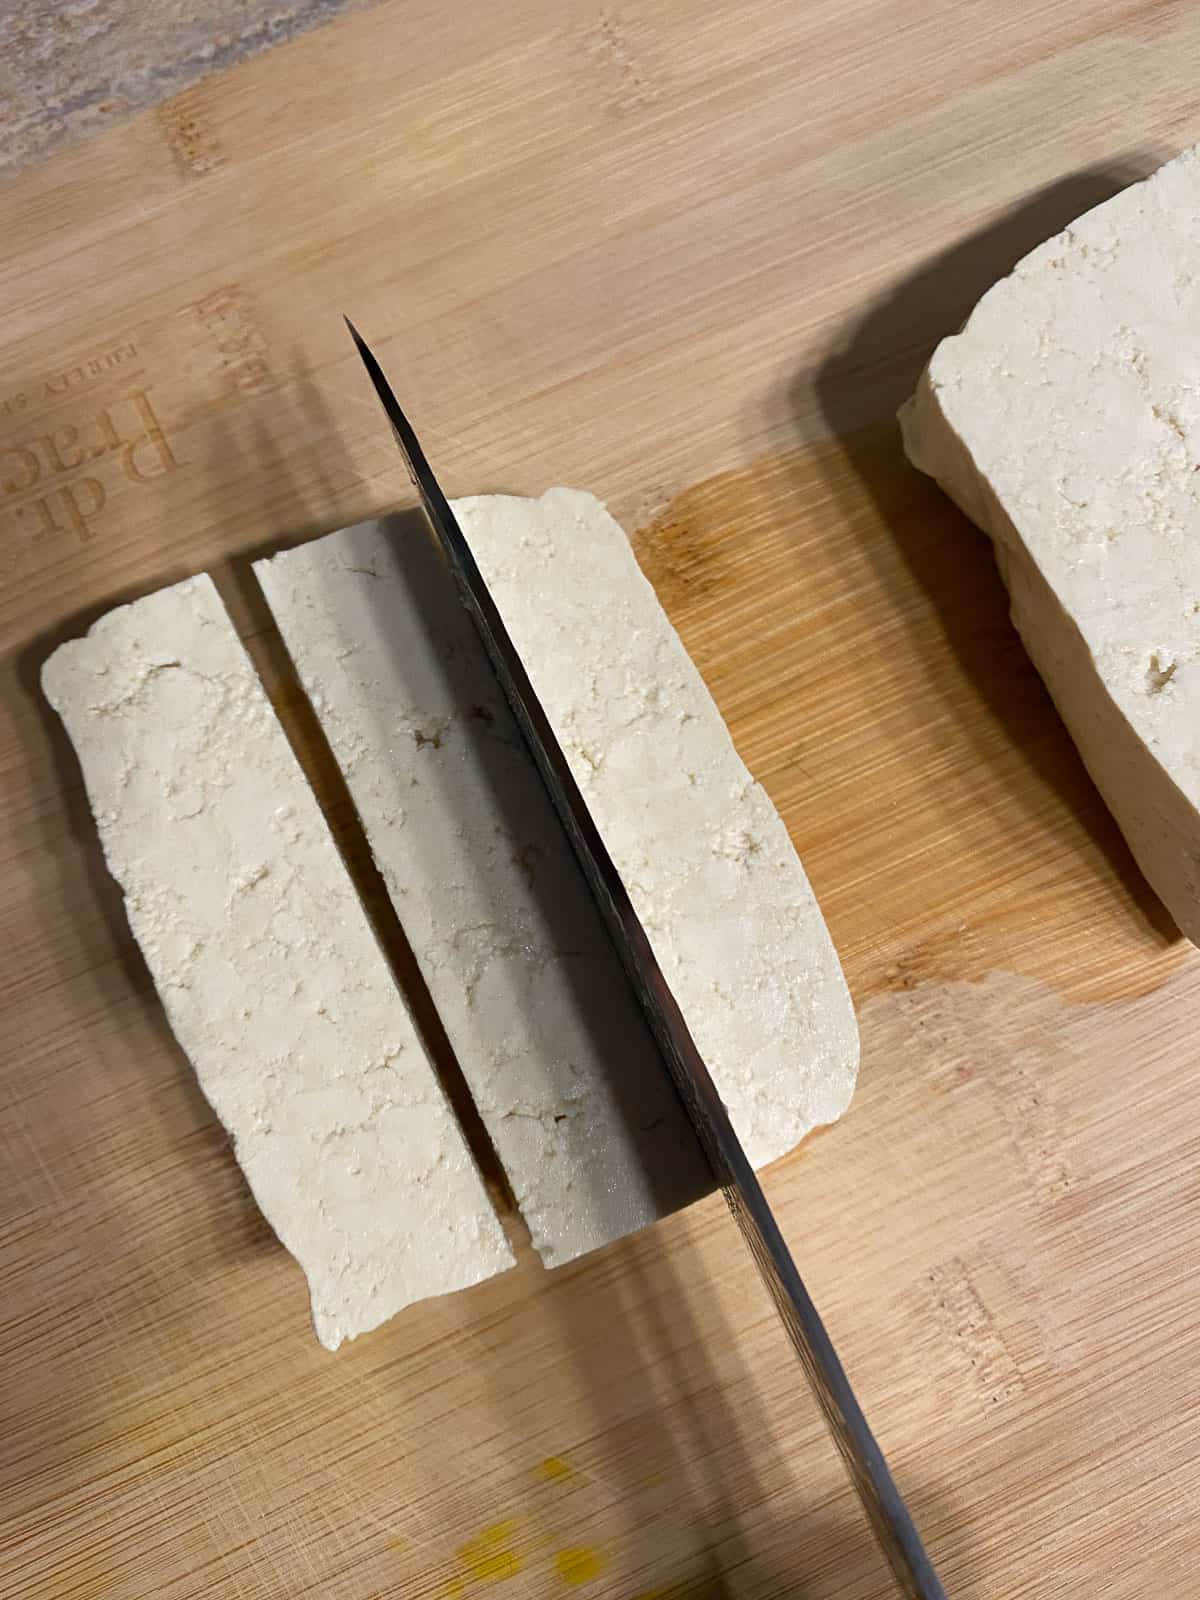 process shot of slicing tofu on cutting board